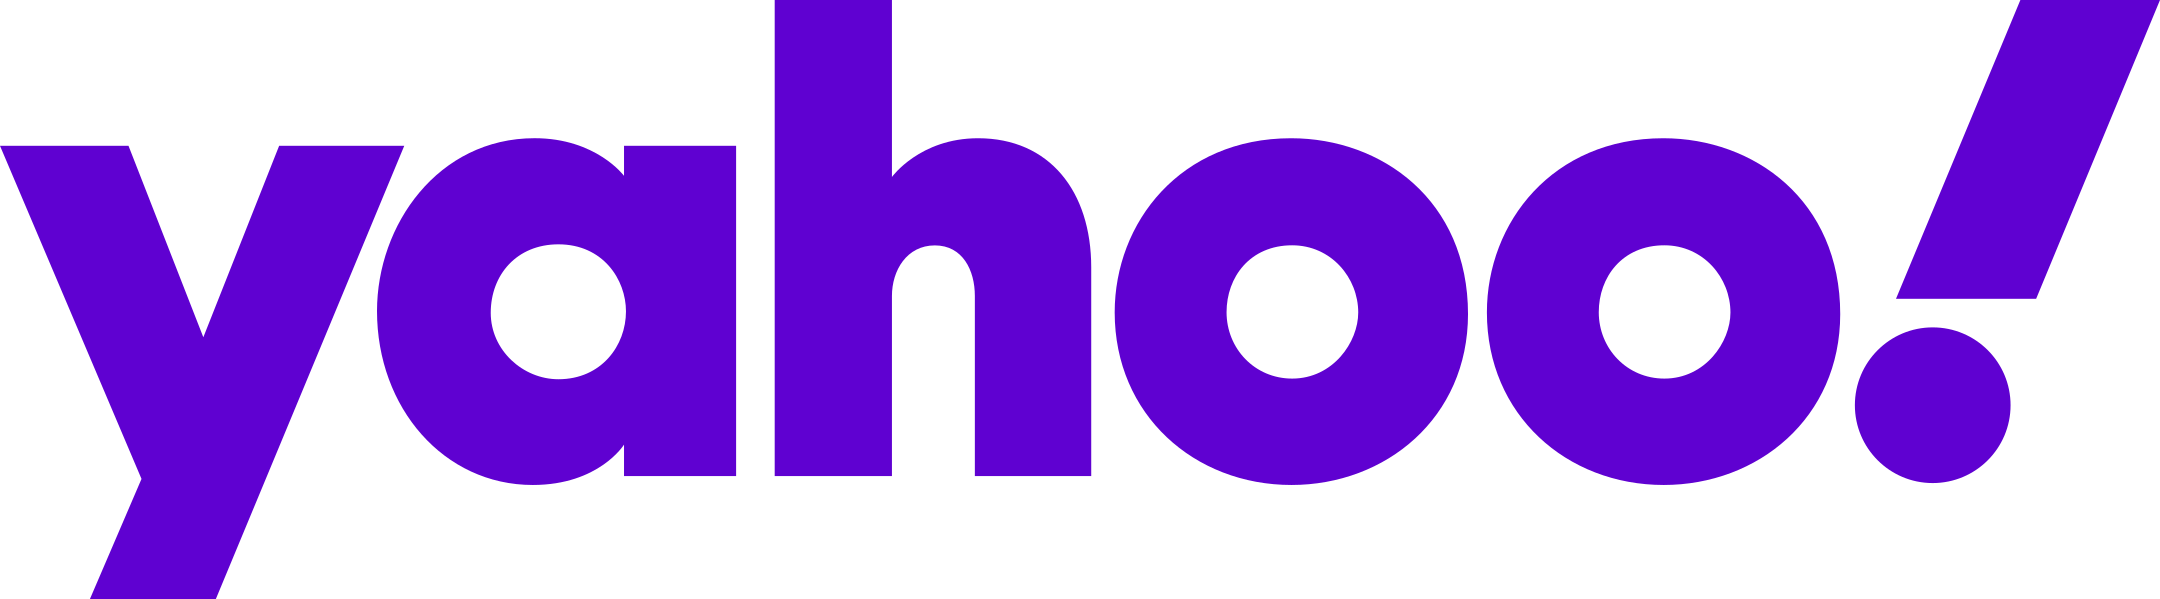 Blue yahoo logo vetor download logo #40450